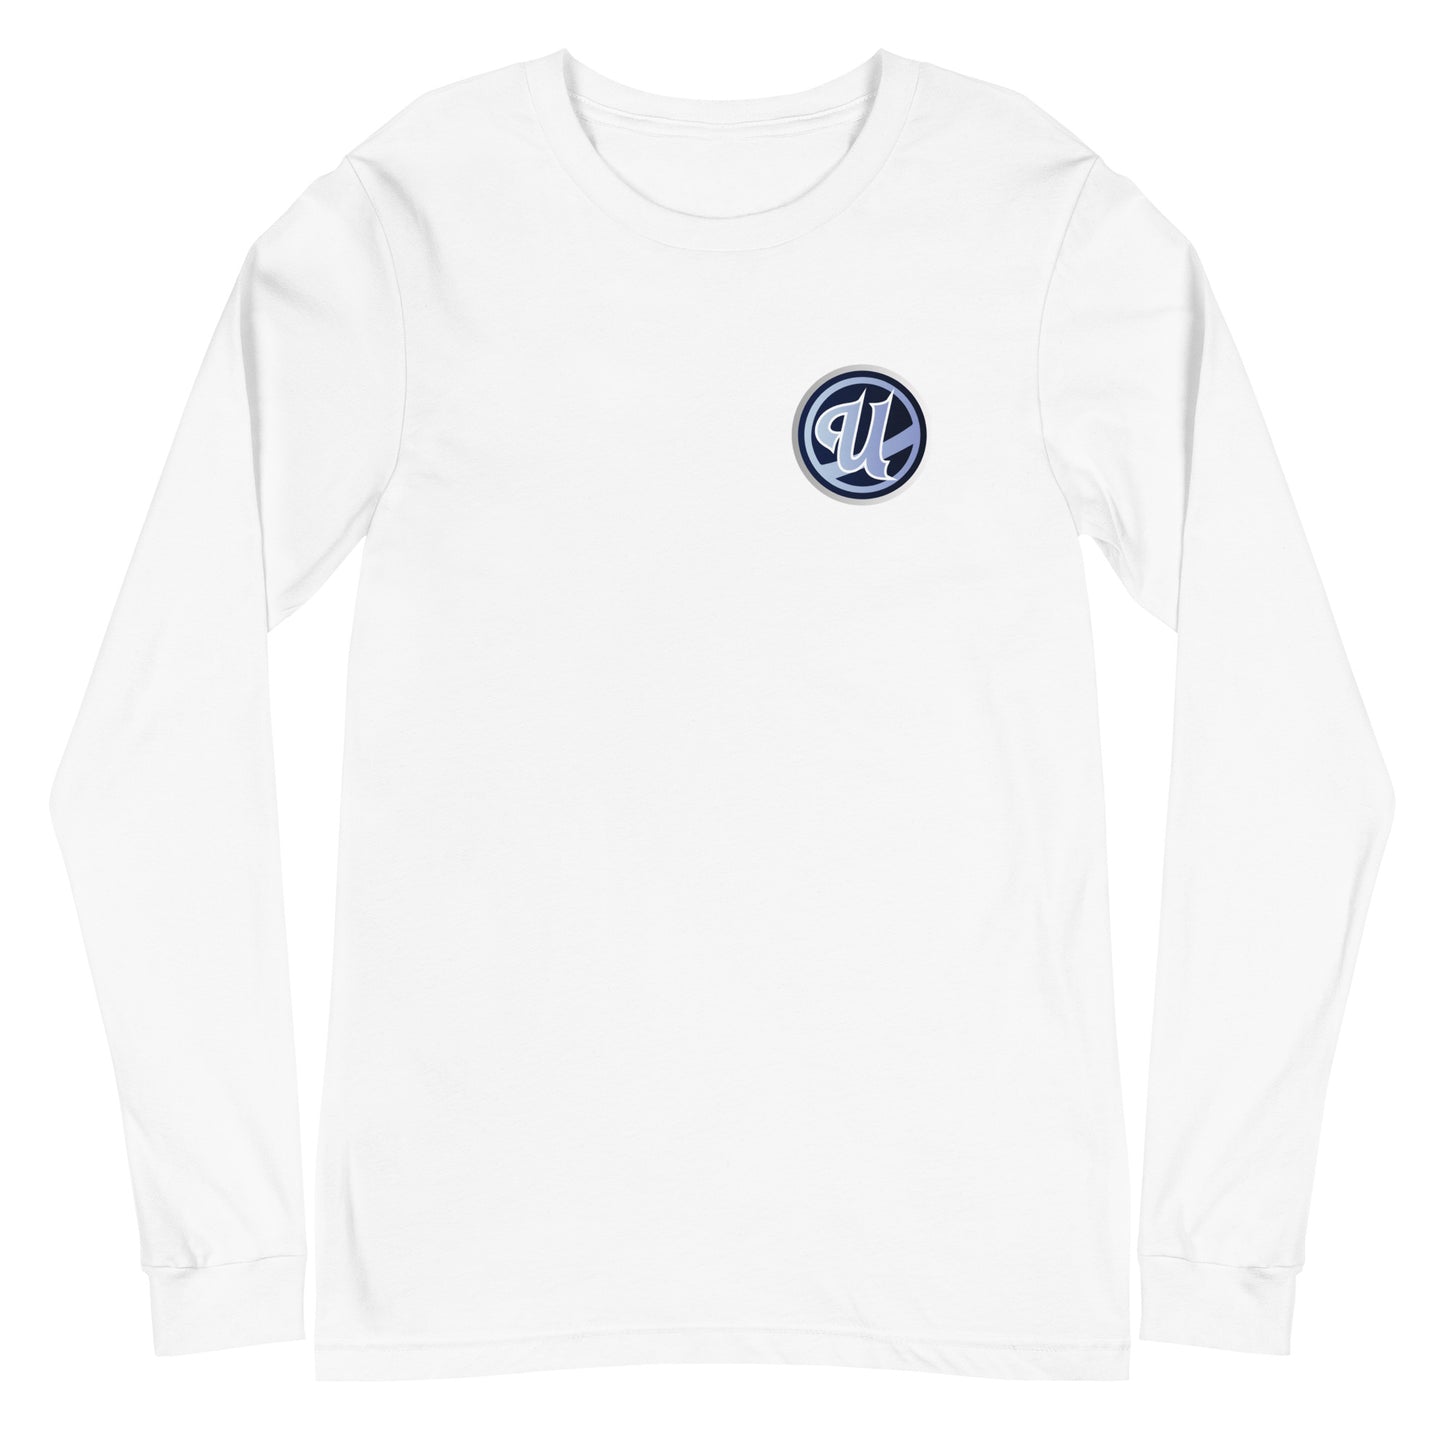 UAHL Winter Series - Snow Long Sleeve Shirt